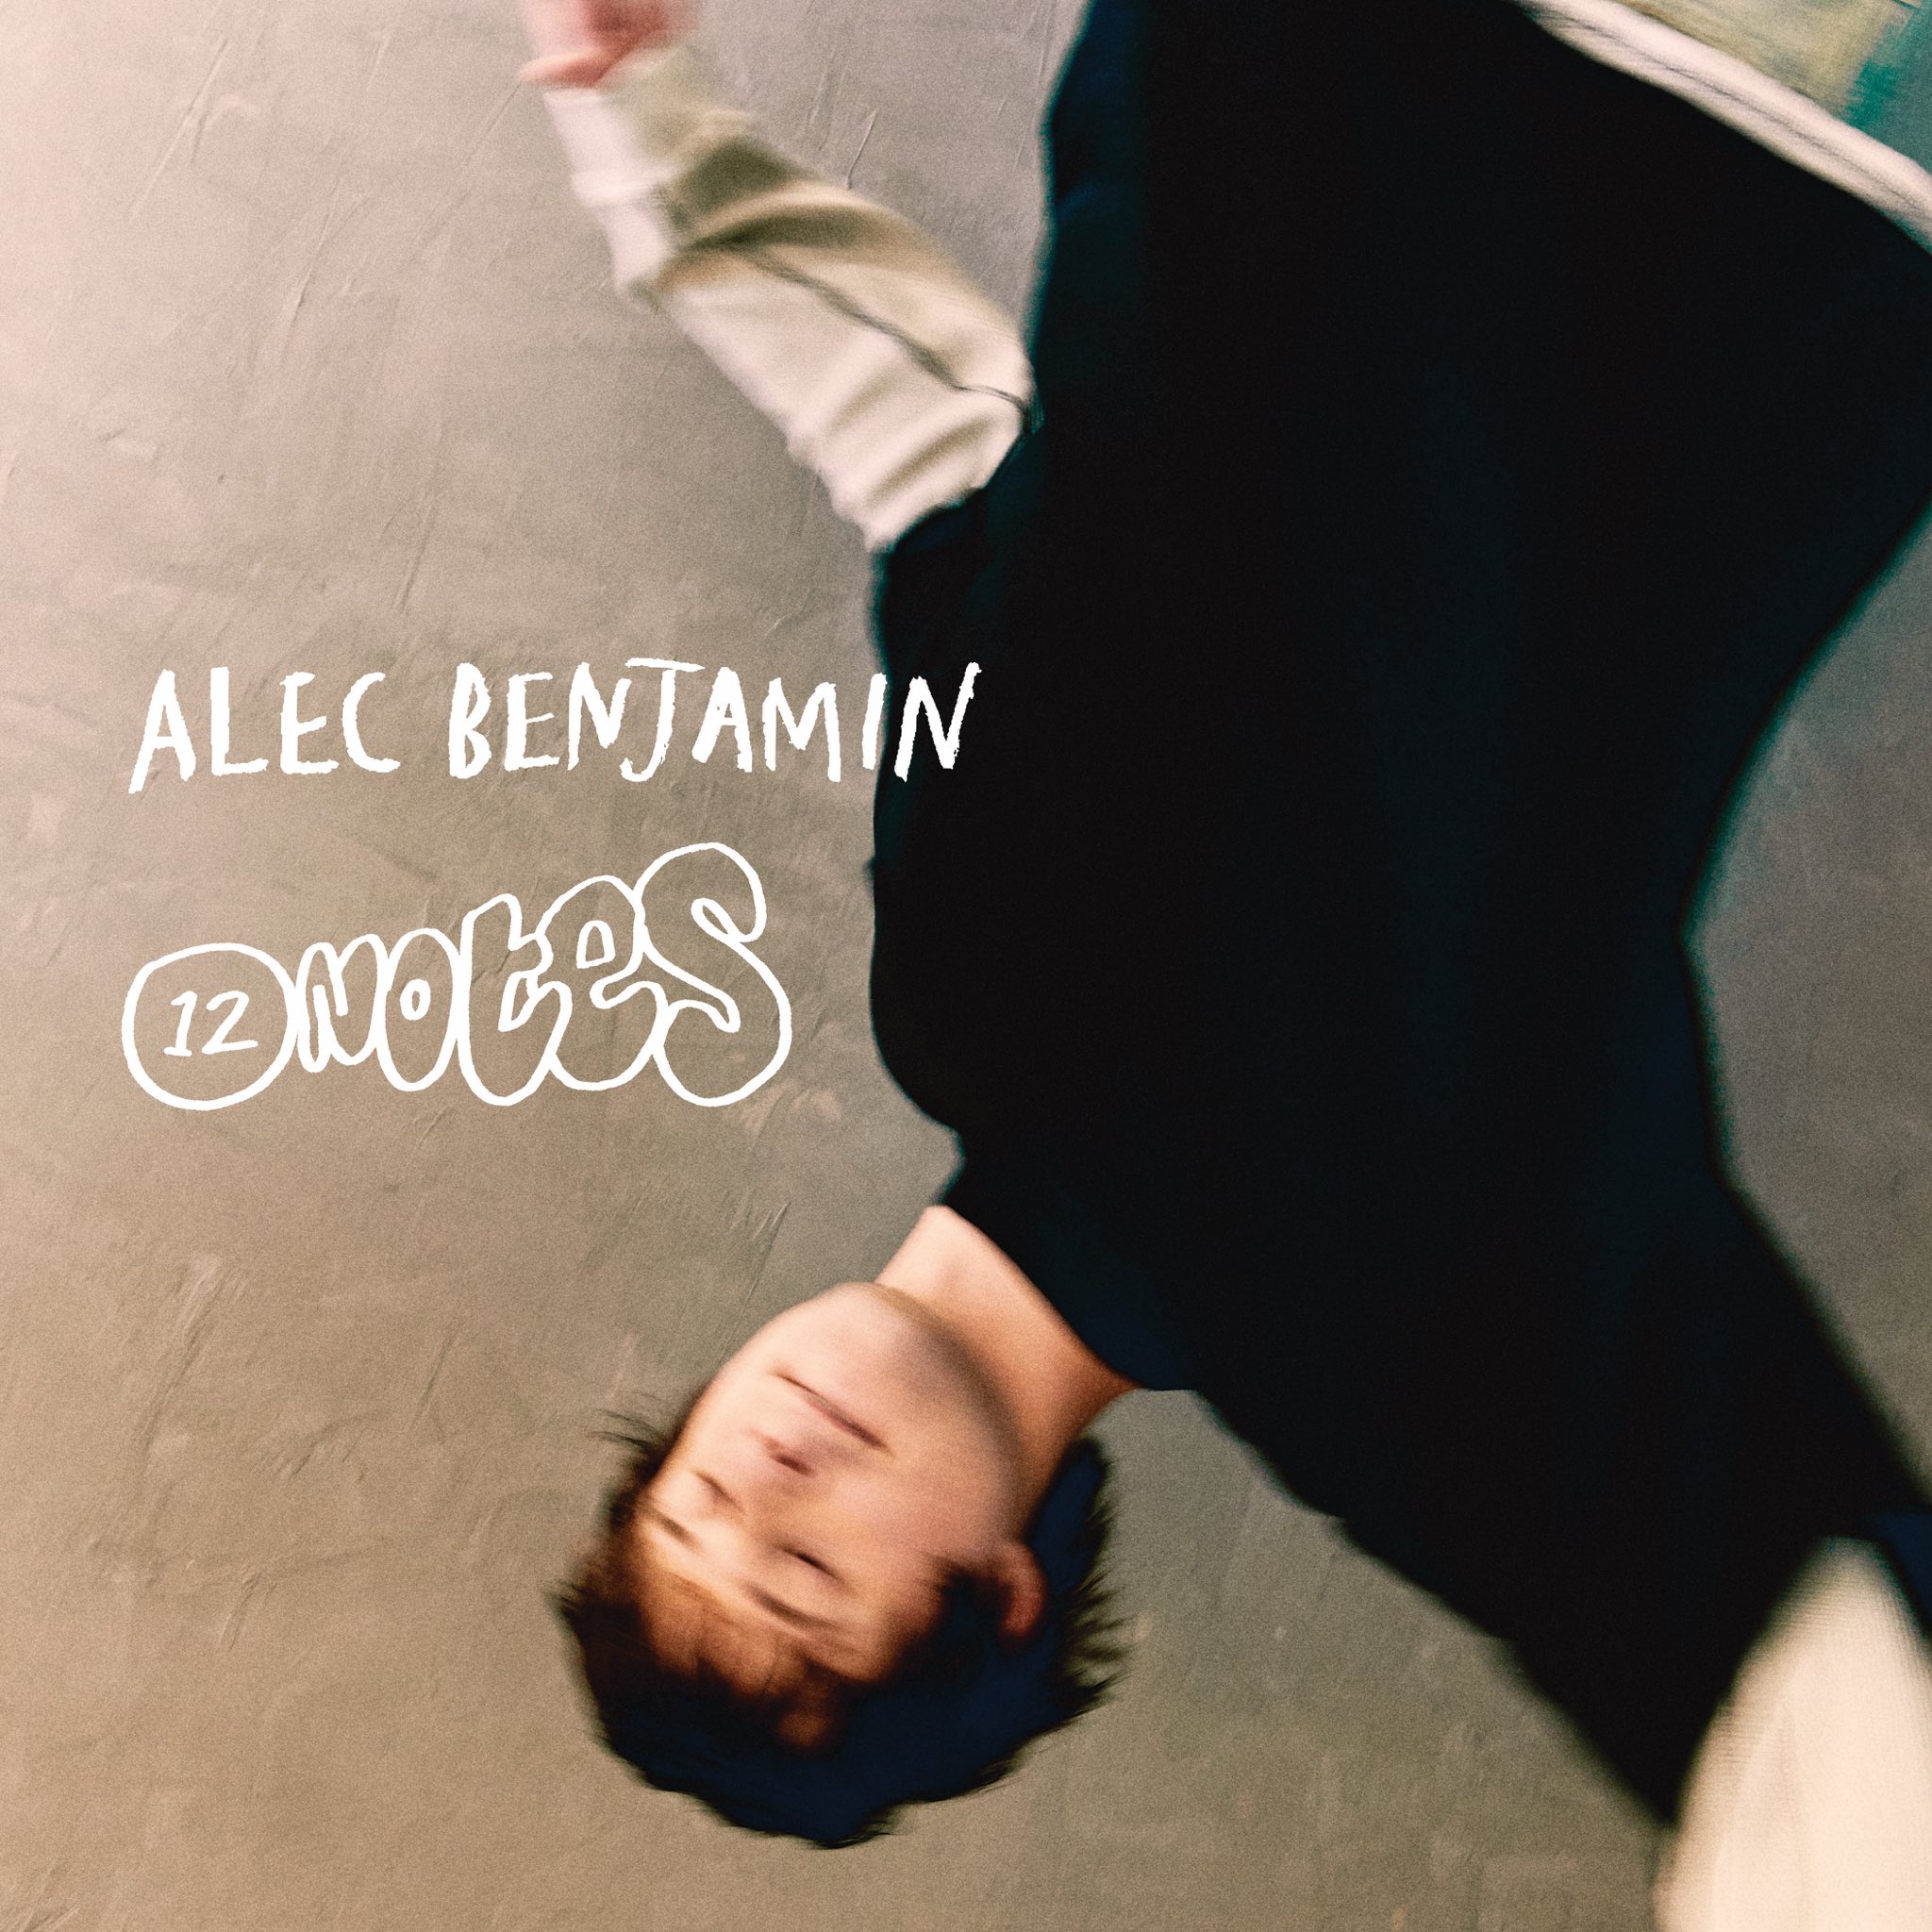 Alec Benjamin 12 Notes cover artwork